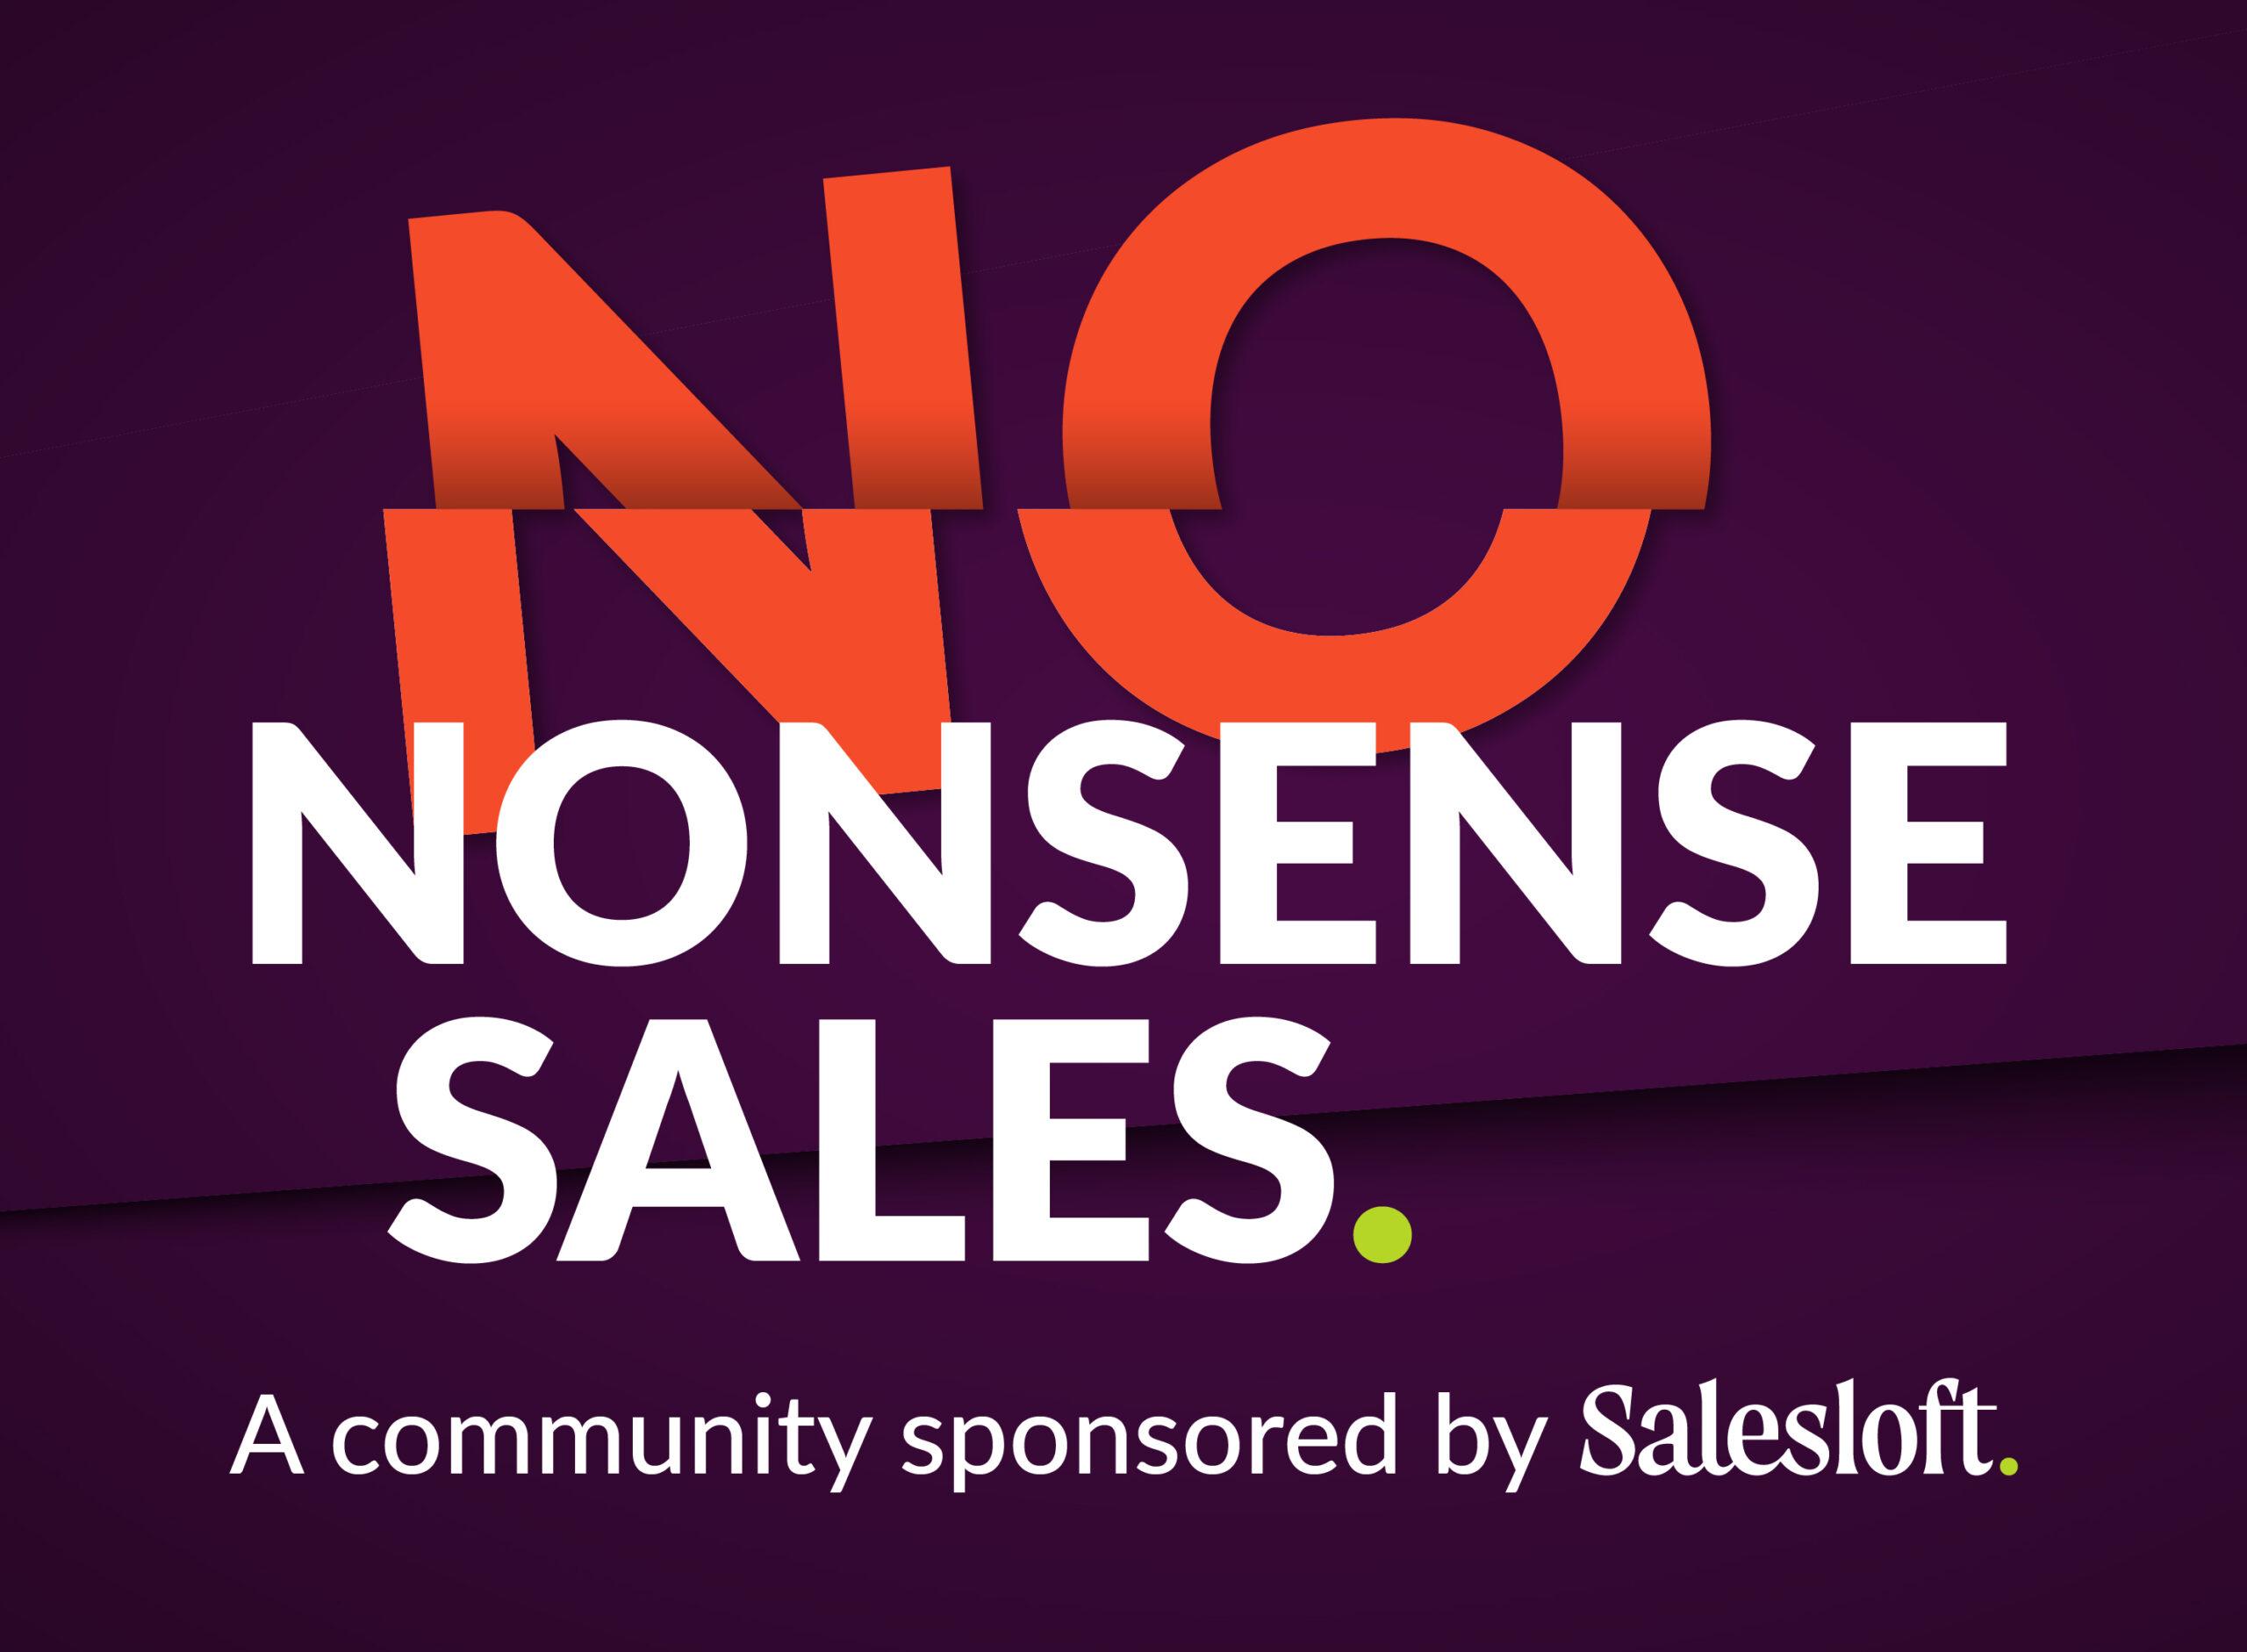 "No nonsense sales community"